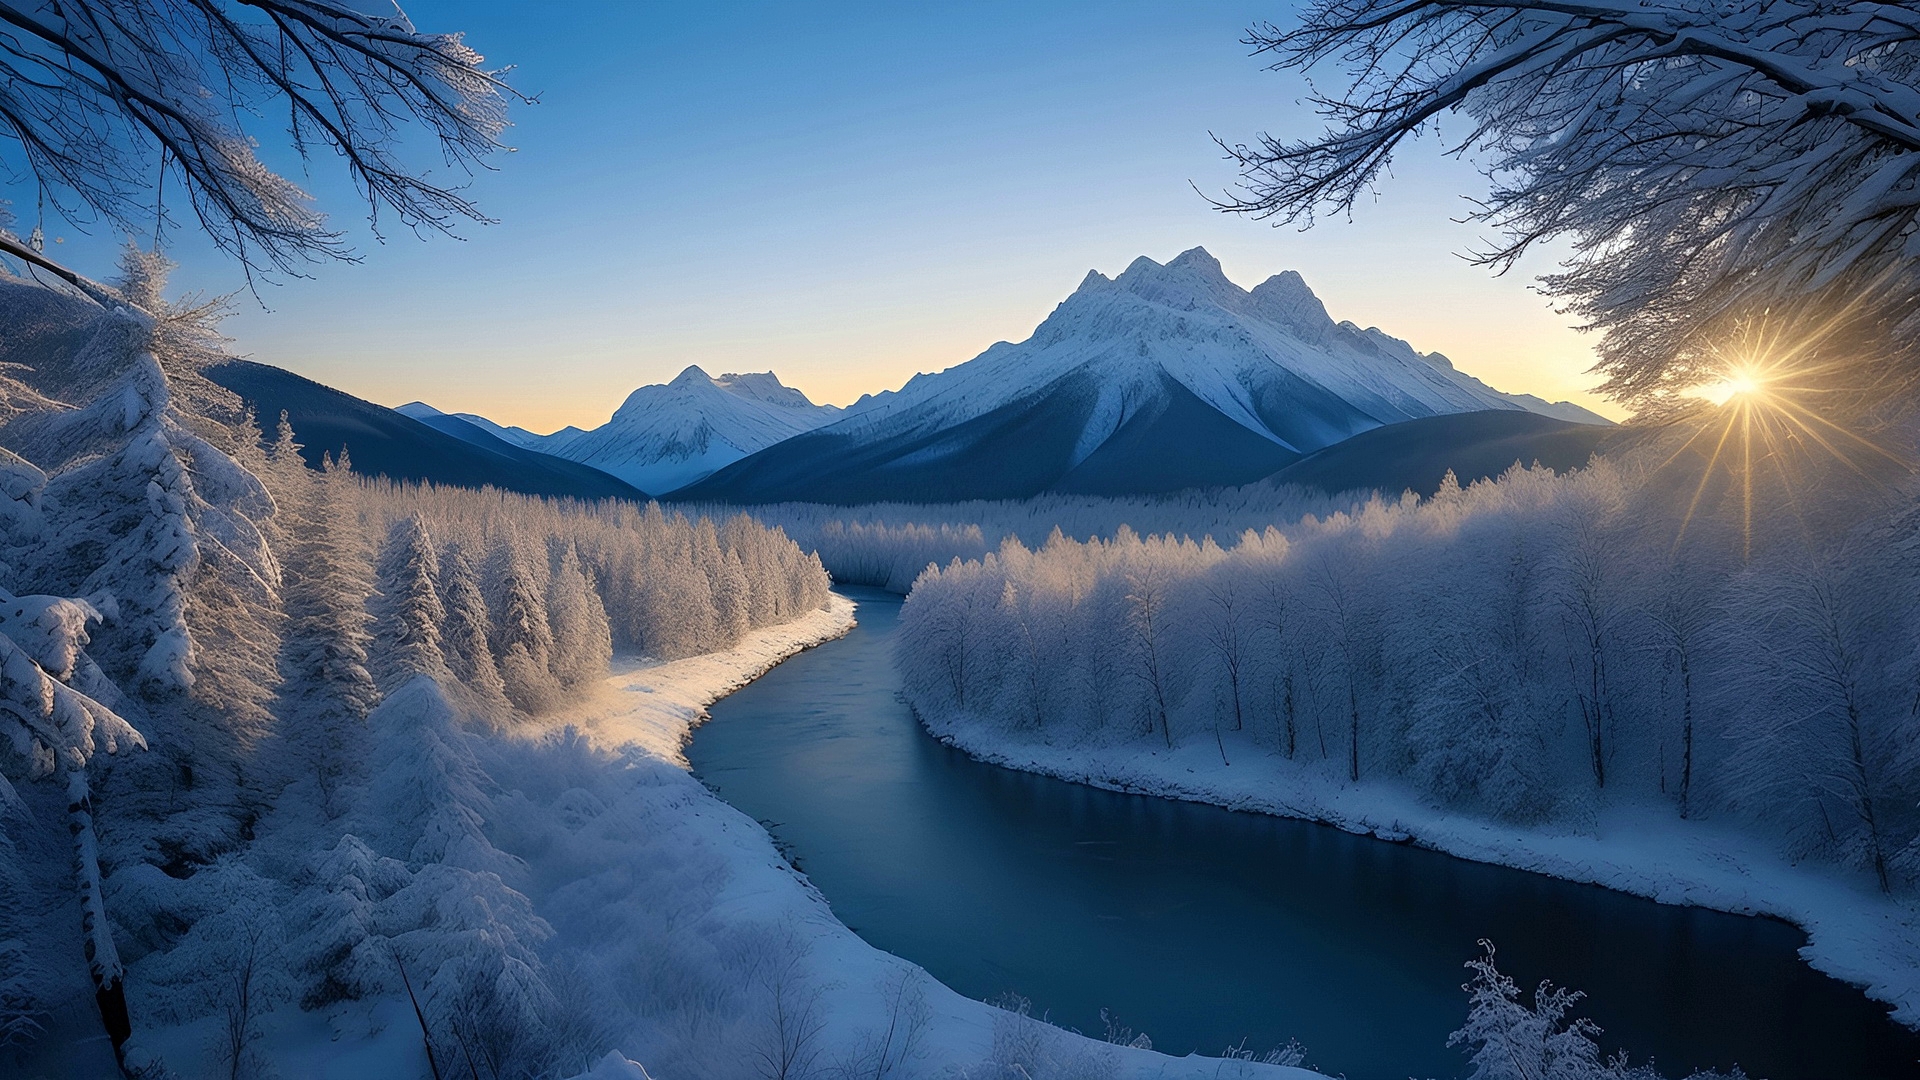 Winter landscape and river